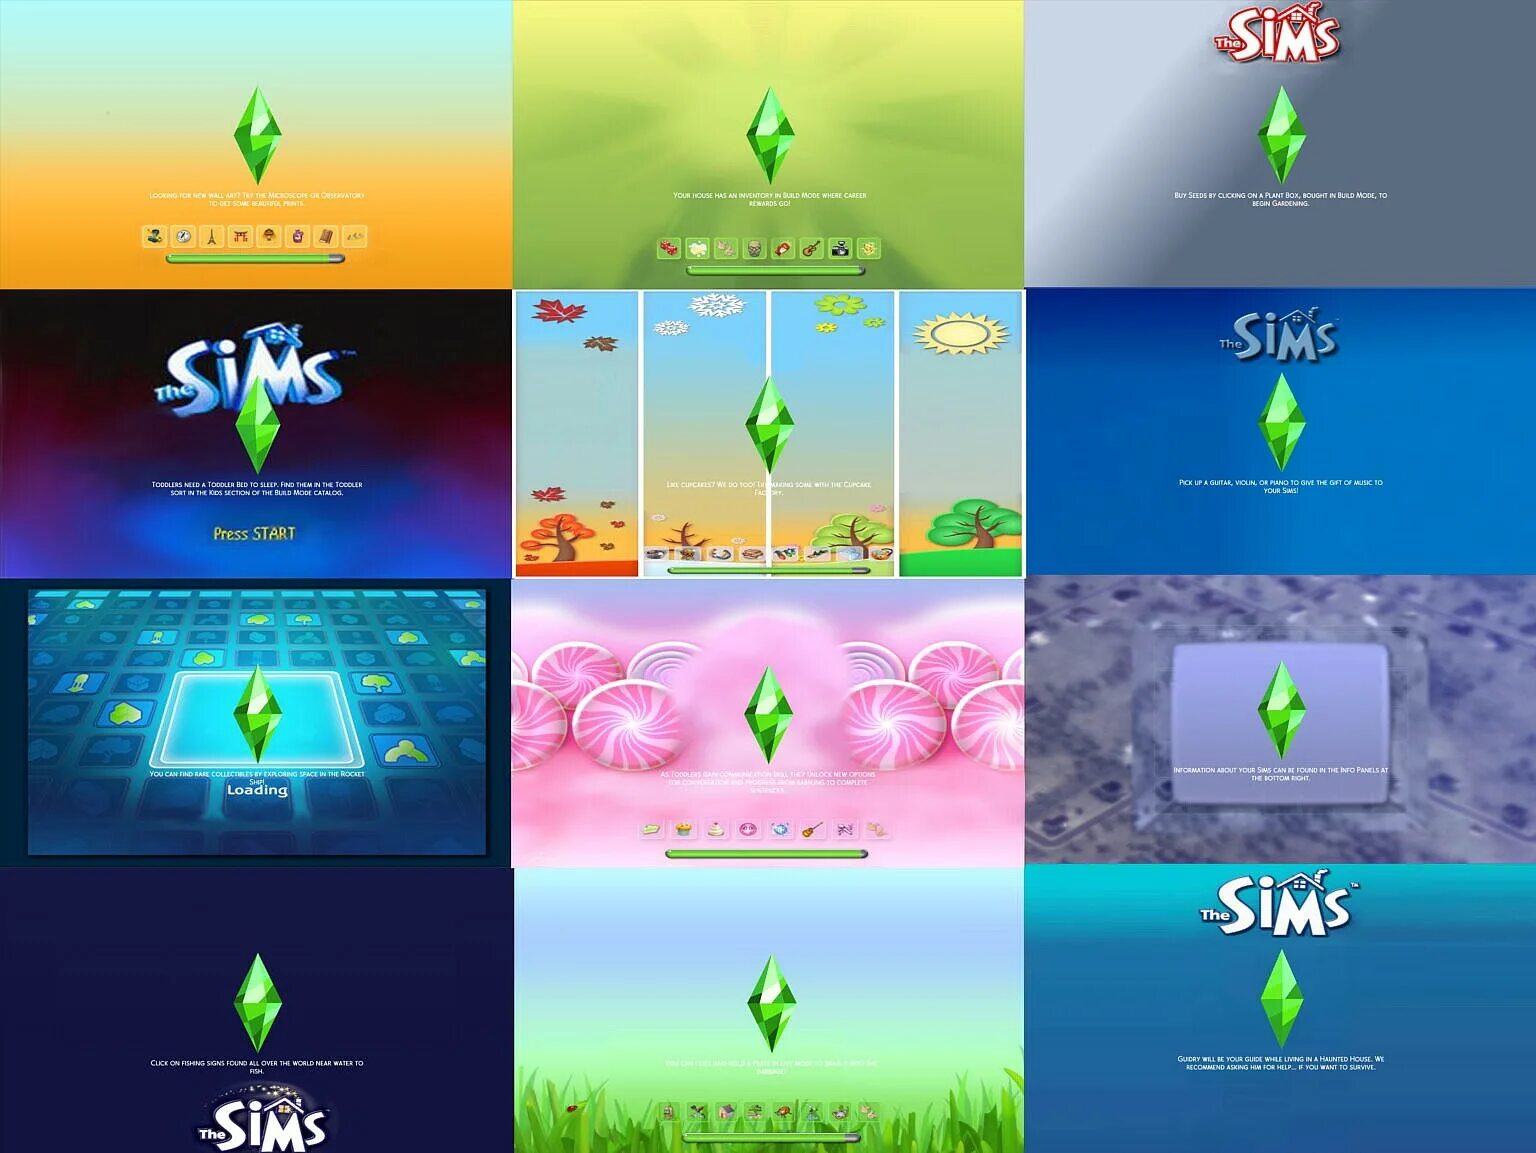 Sims 4 loading screen. SIMS 4 экран загрузки. Симс 4 загрузочный экран. Симс 4 экран загрузки ок. The SIMS 1 loading Screen.